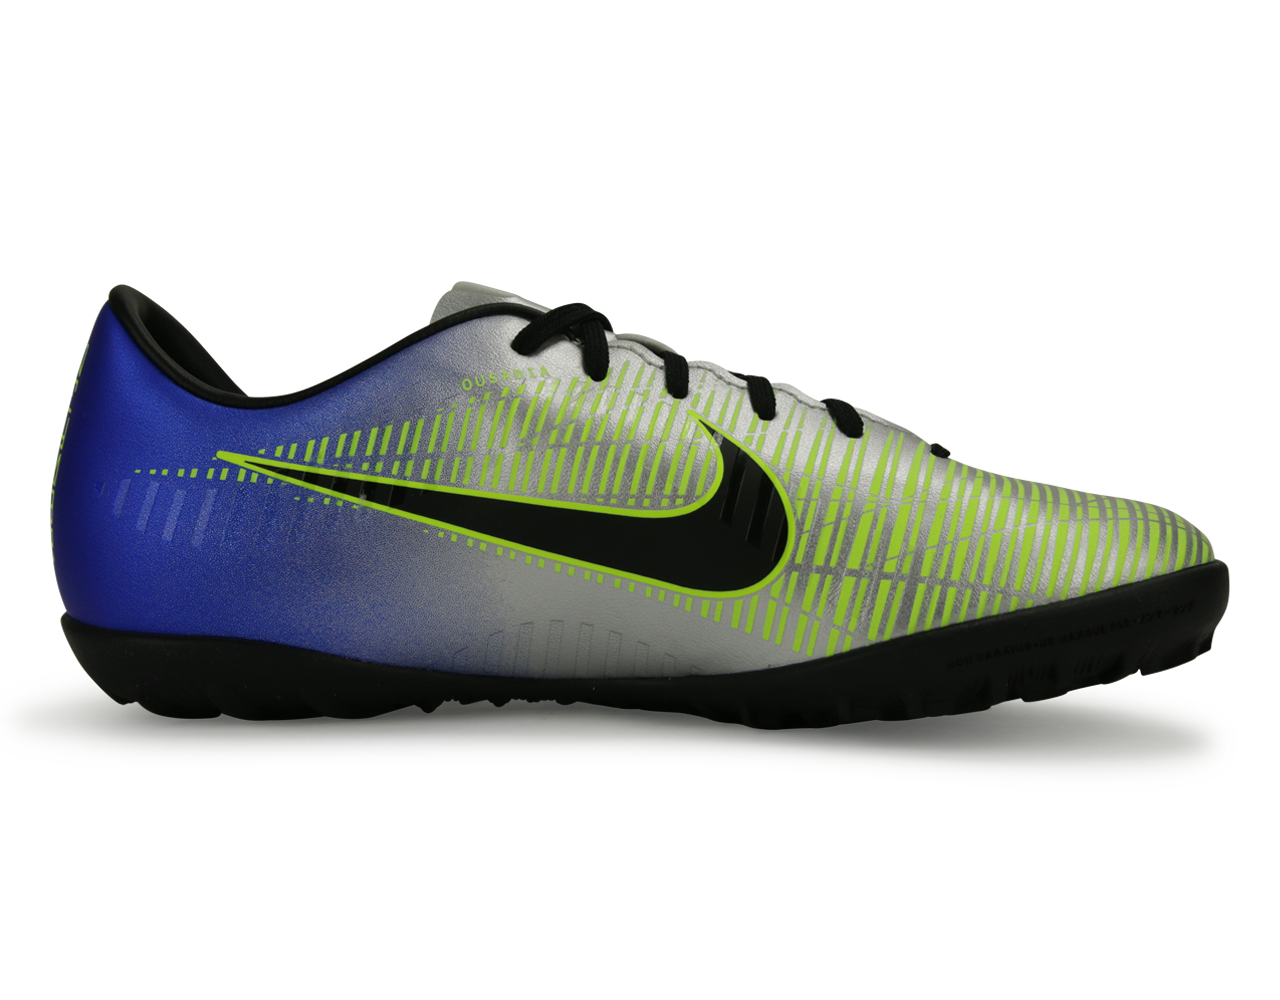 Nike Kids MercurialX Victory 6 Neymar Jr Turf Soccer Shoes Racer Blue/Black/Chrome/Volt